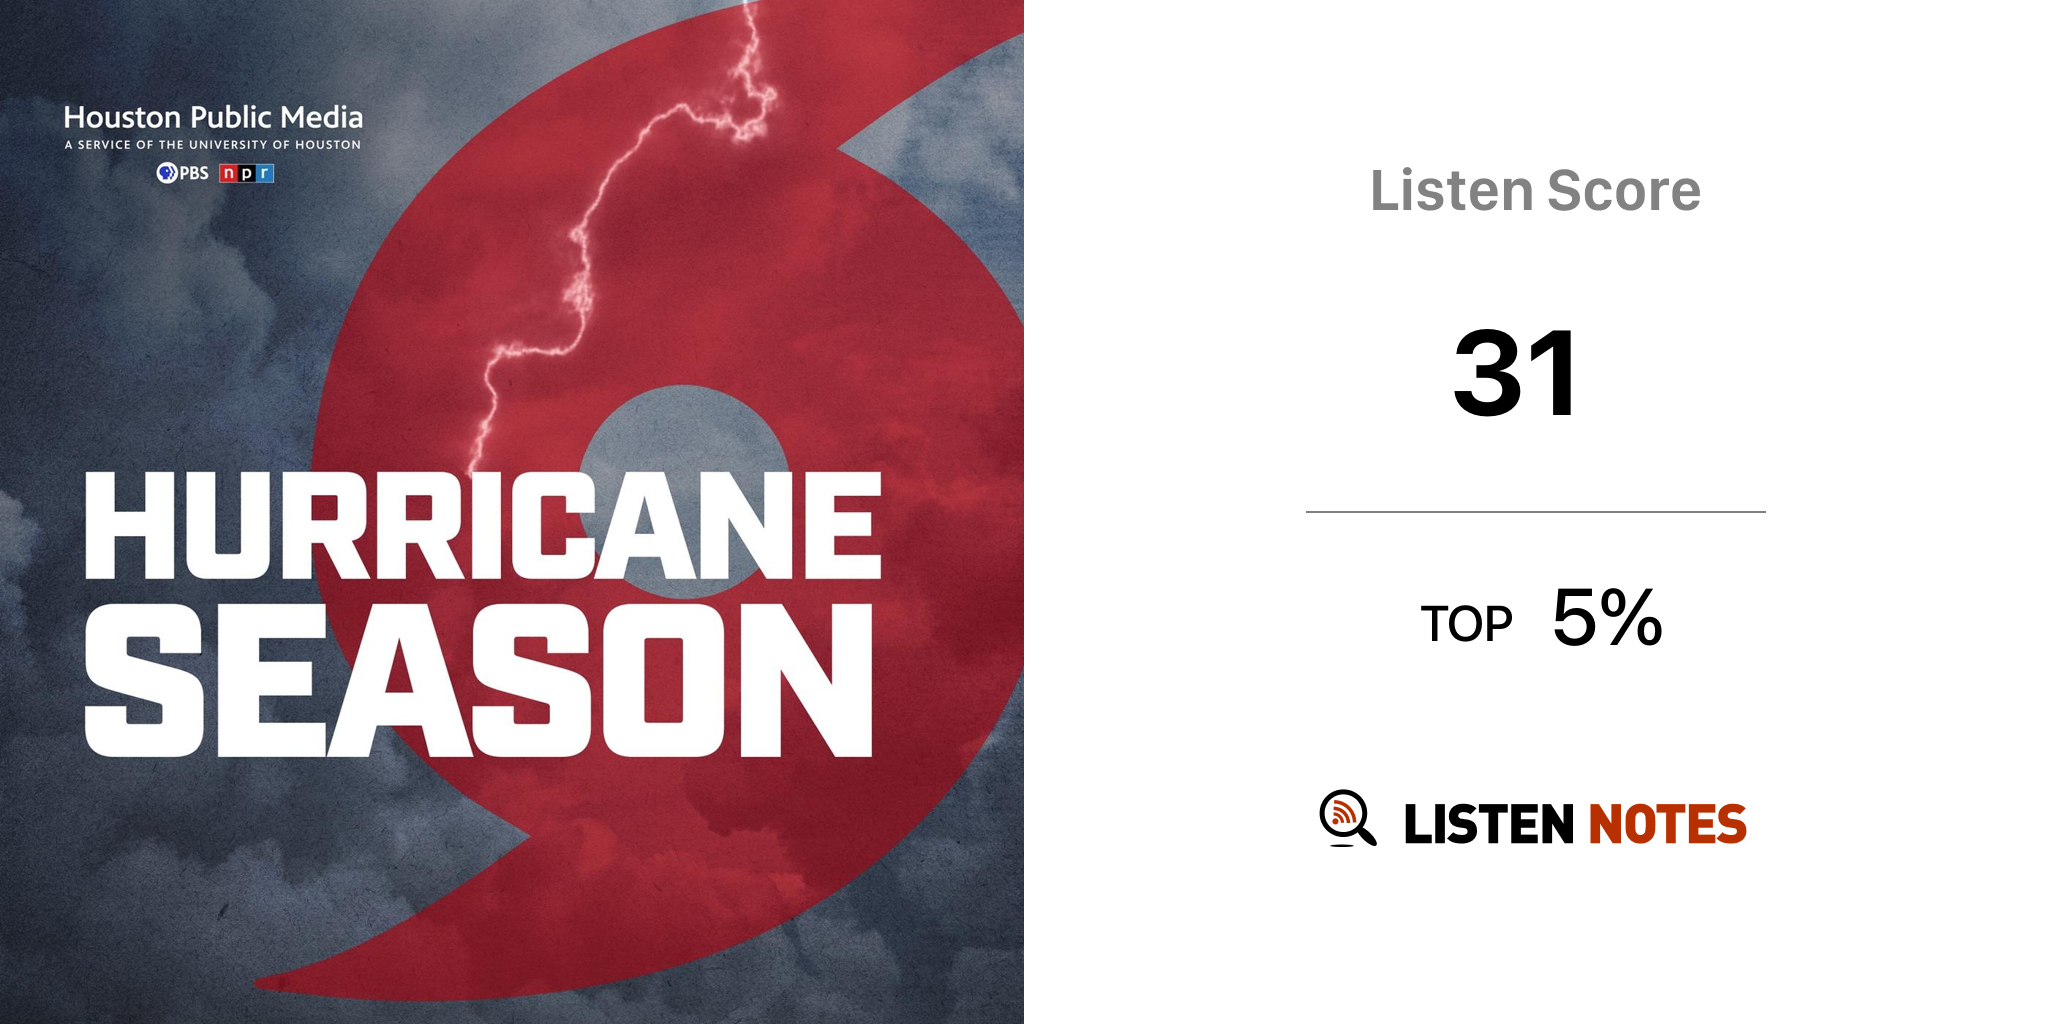 Hurricane Season (podcast) Houston Public Media Listen Notes